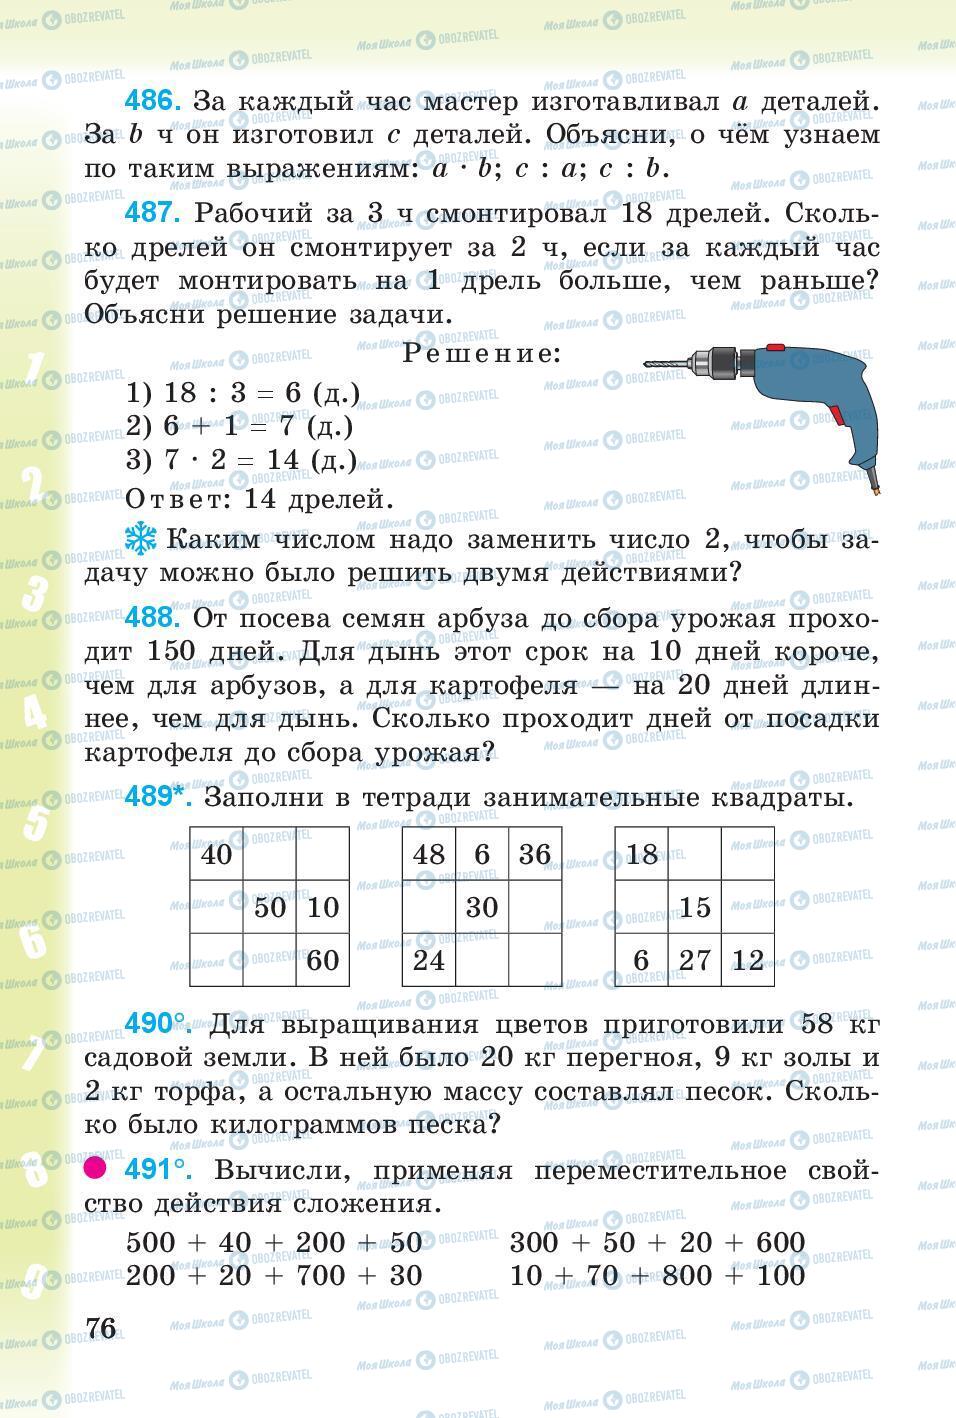 Учебники Математика 3 класс страница 76